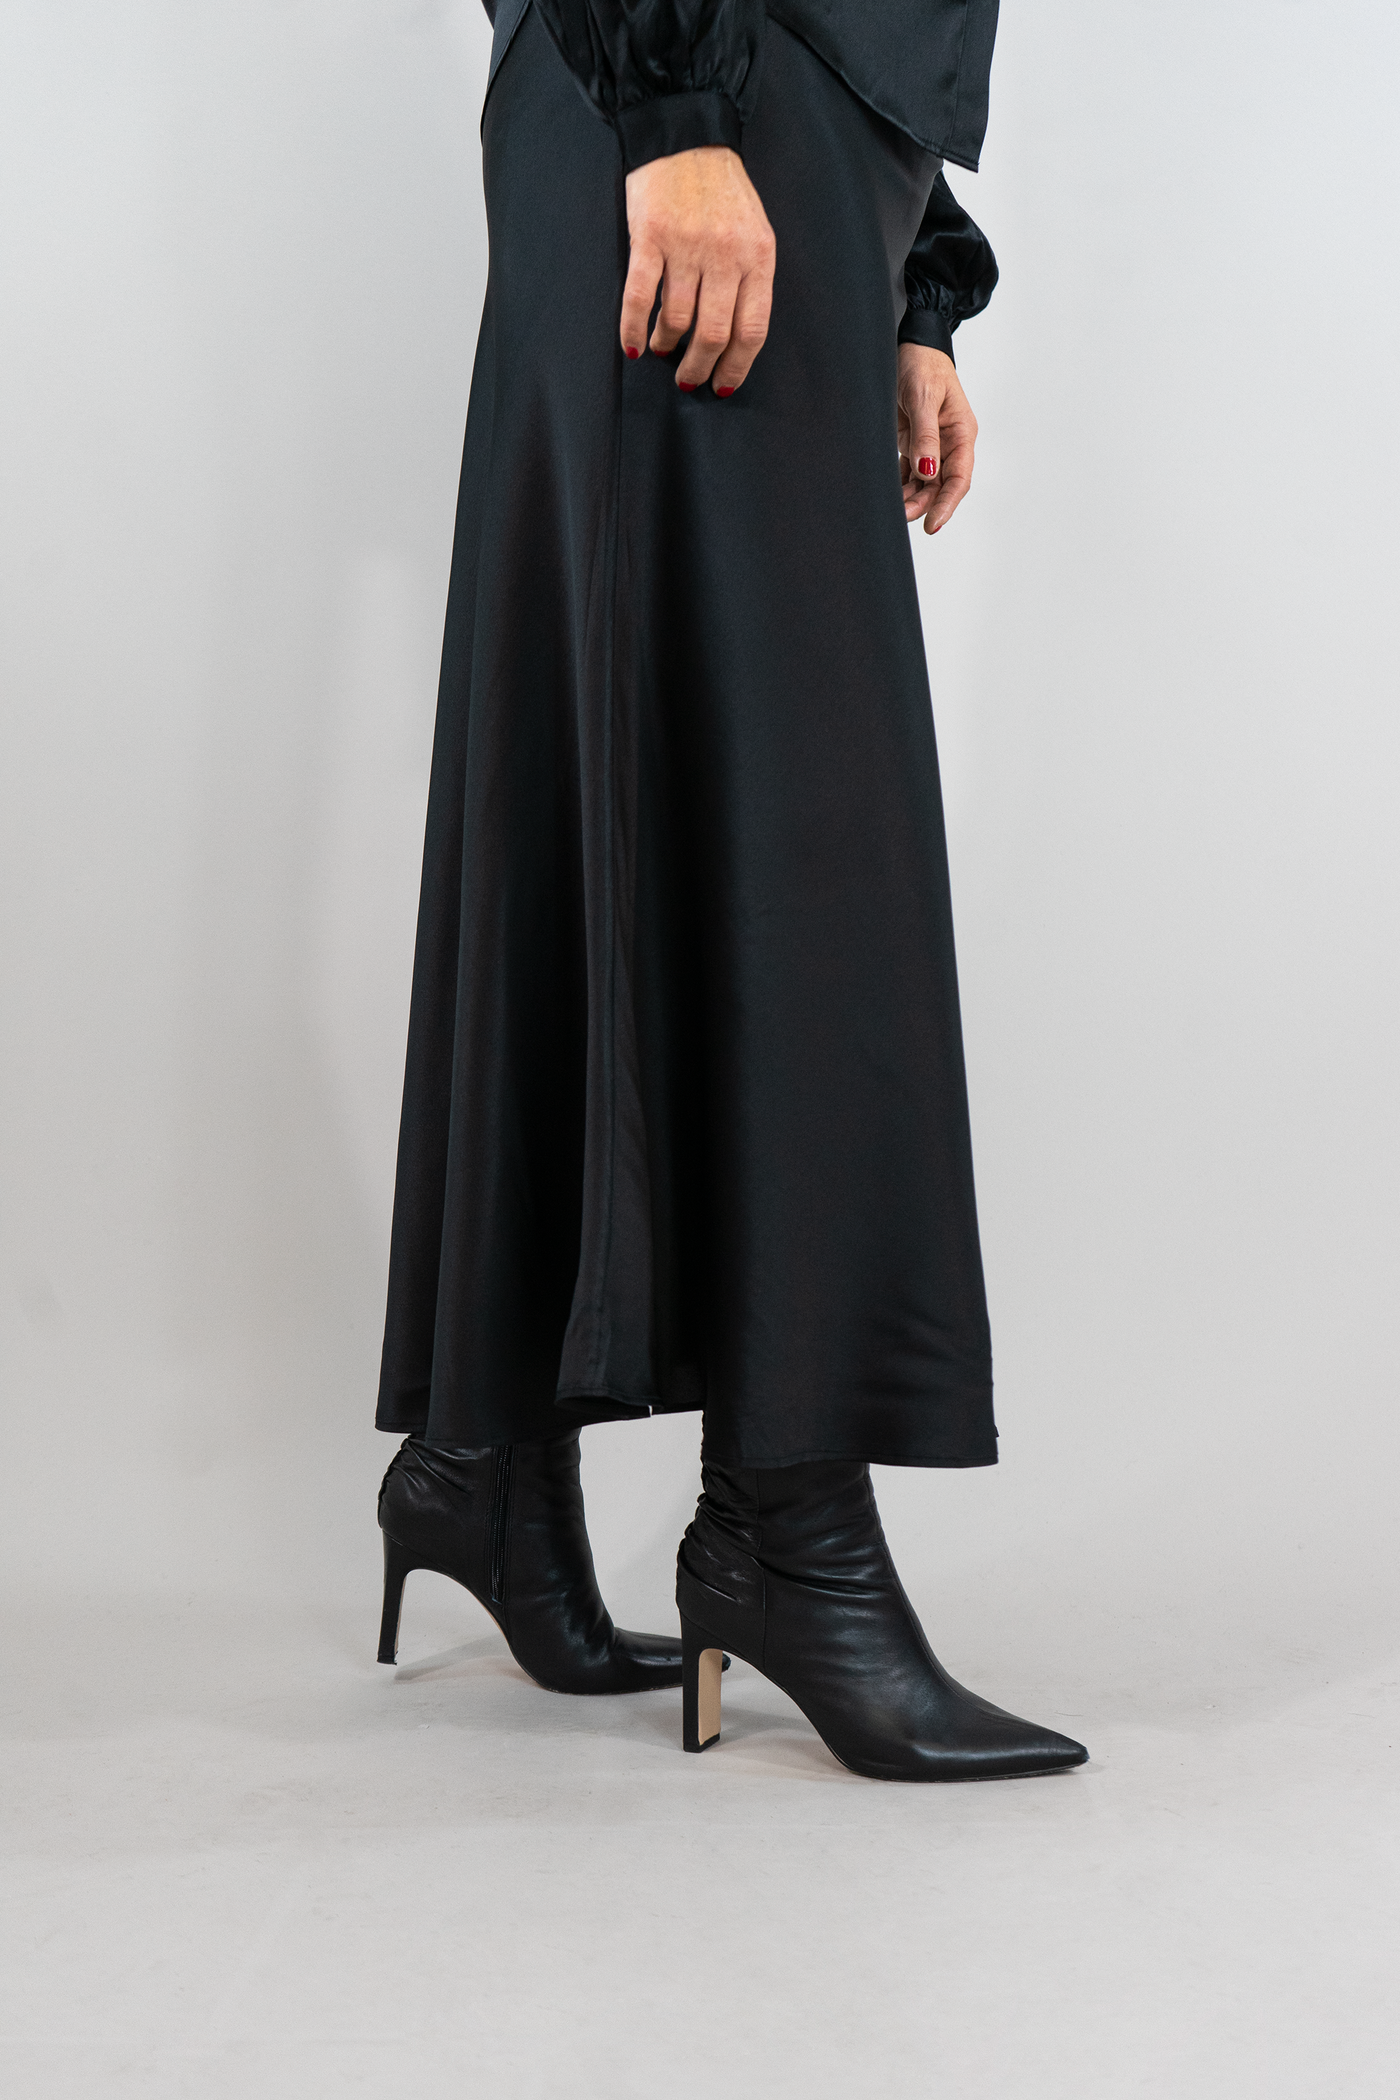 Charlotte Sparre Seidenrock Mermaid Skirt Solid Black